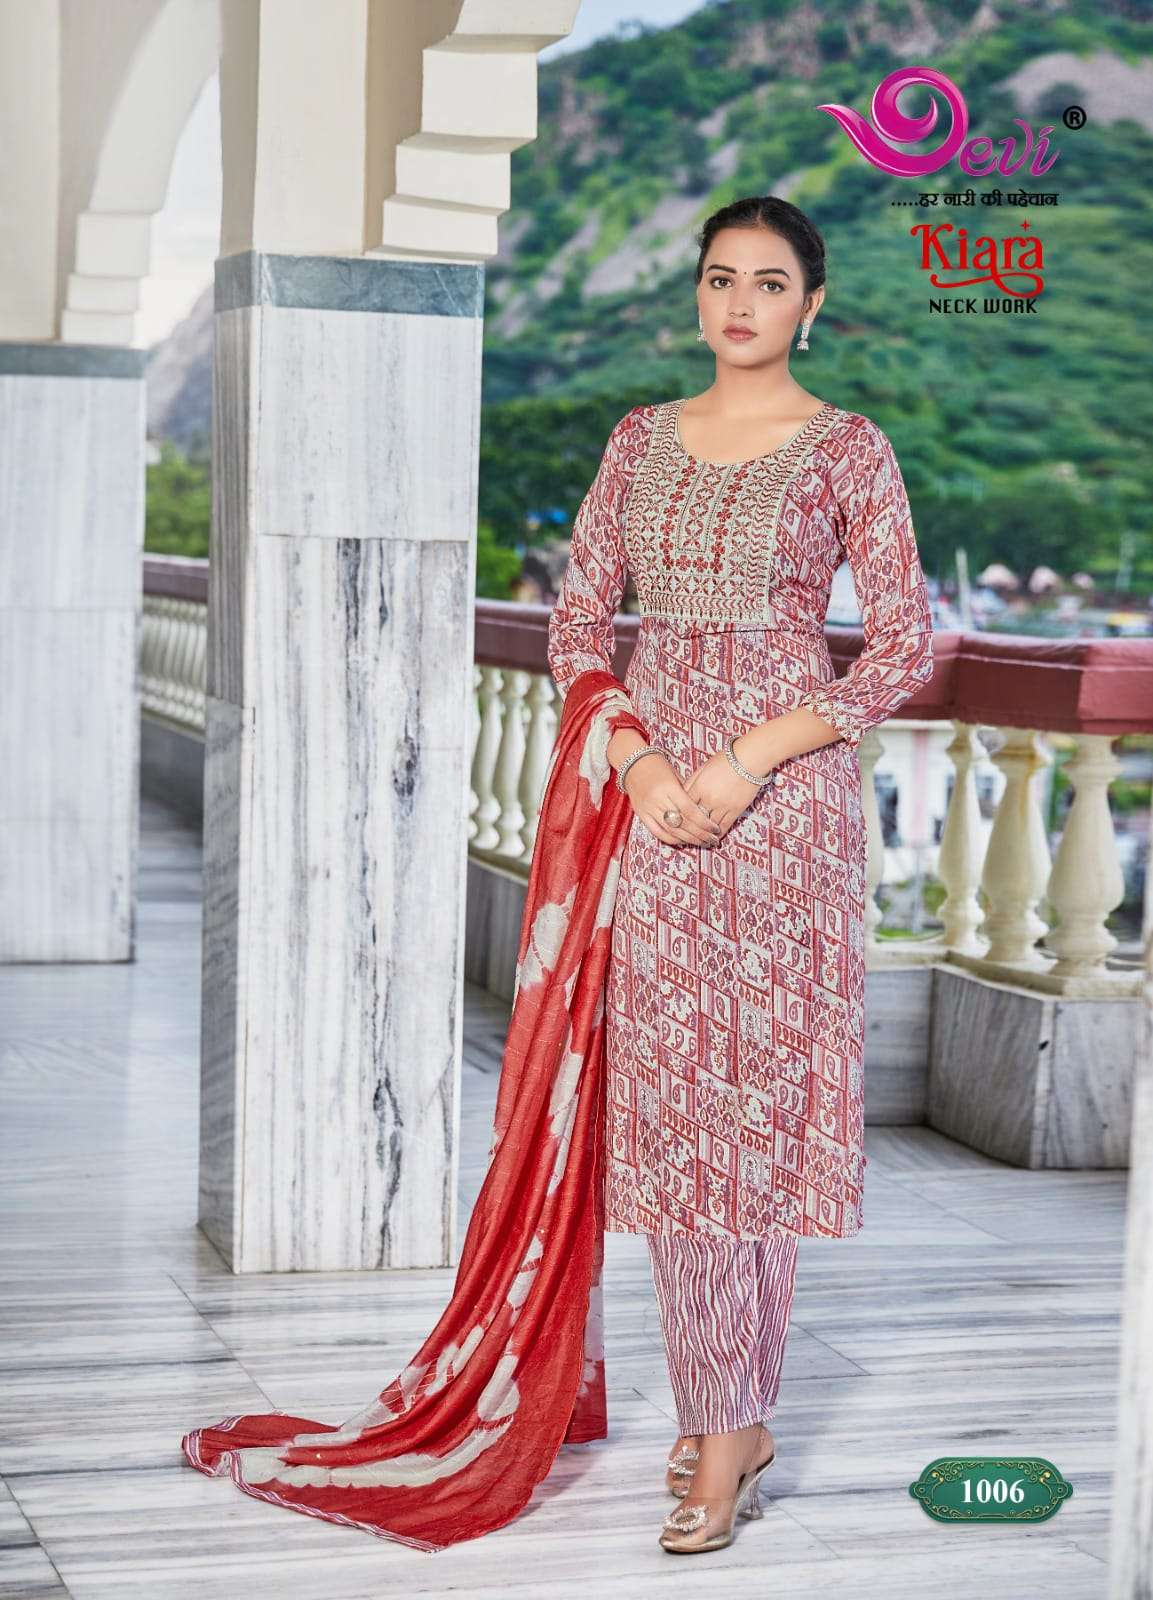 Kiara Buy Devi Online Wholesaler Latest Collection Kurta Suit Set